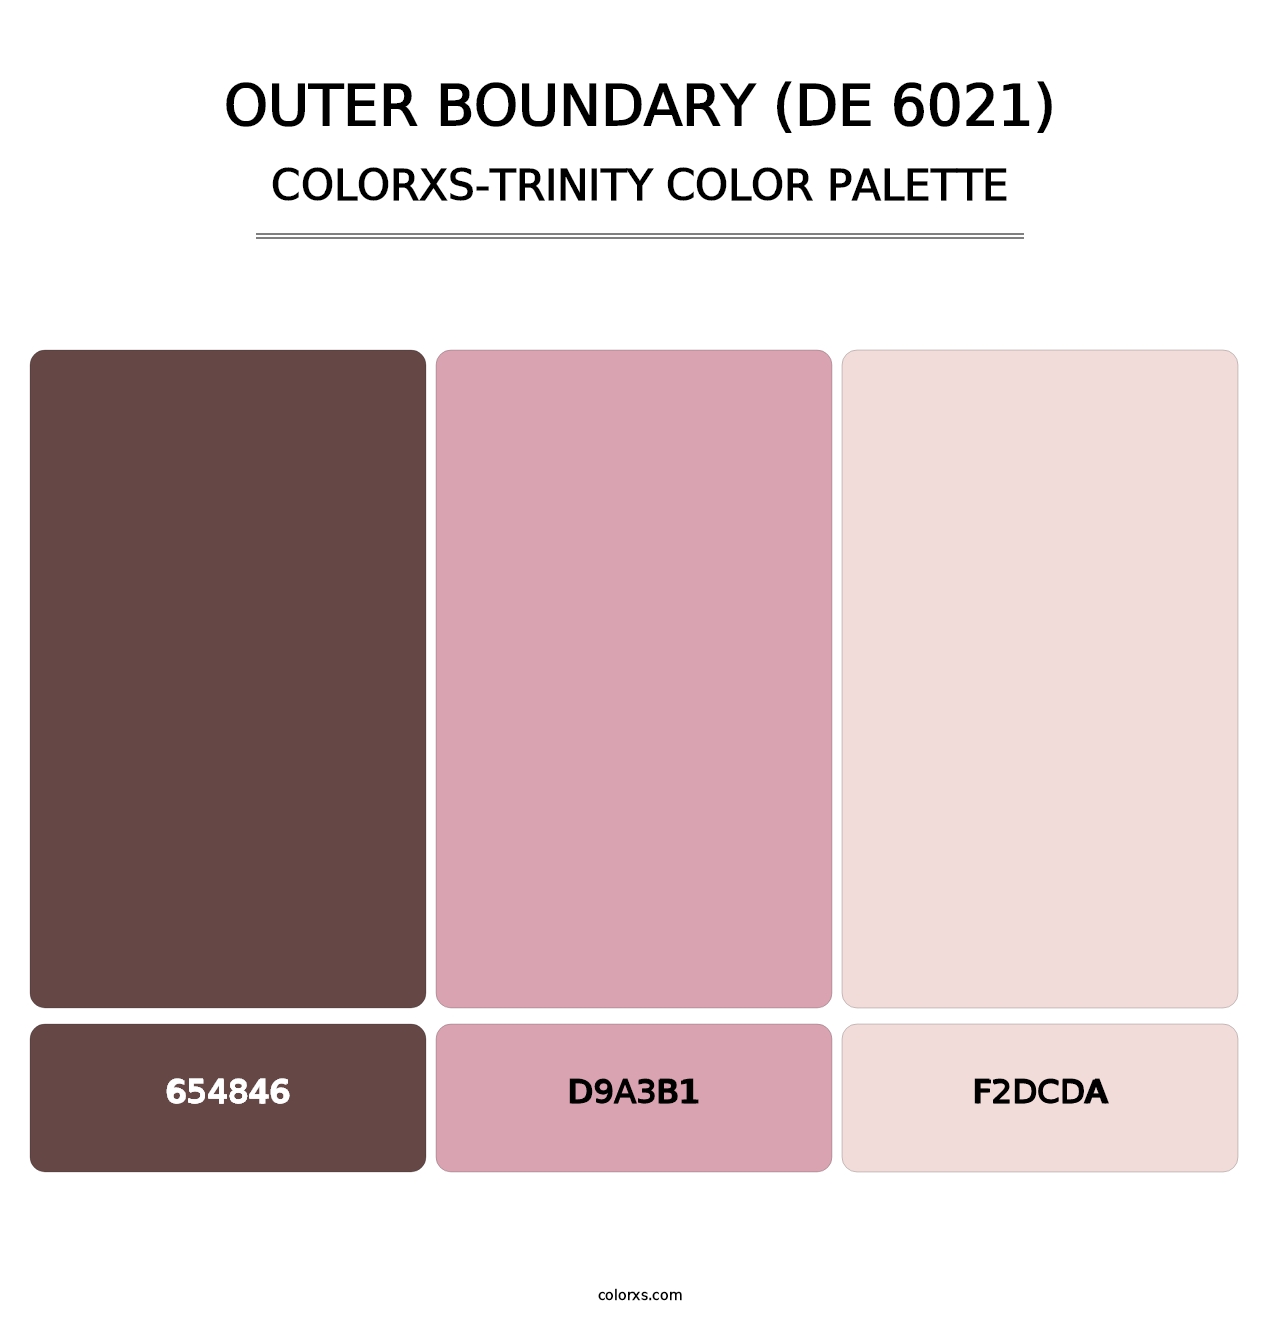 Outer Boundary (DE 6021) - Colorxs Trinity Palette